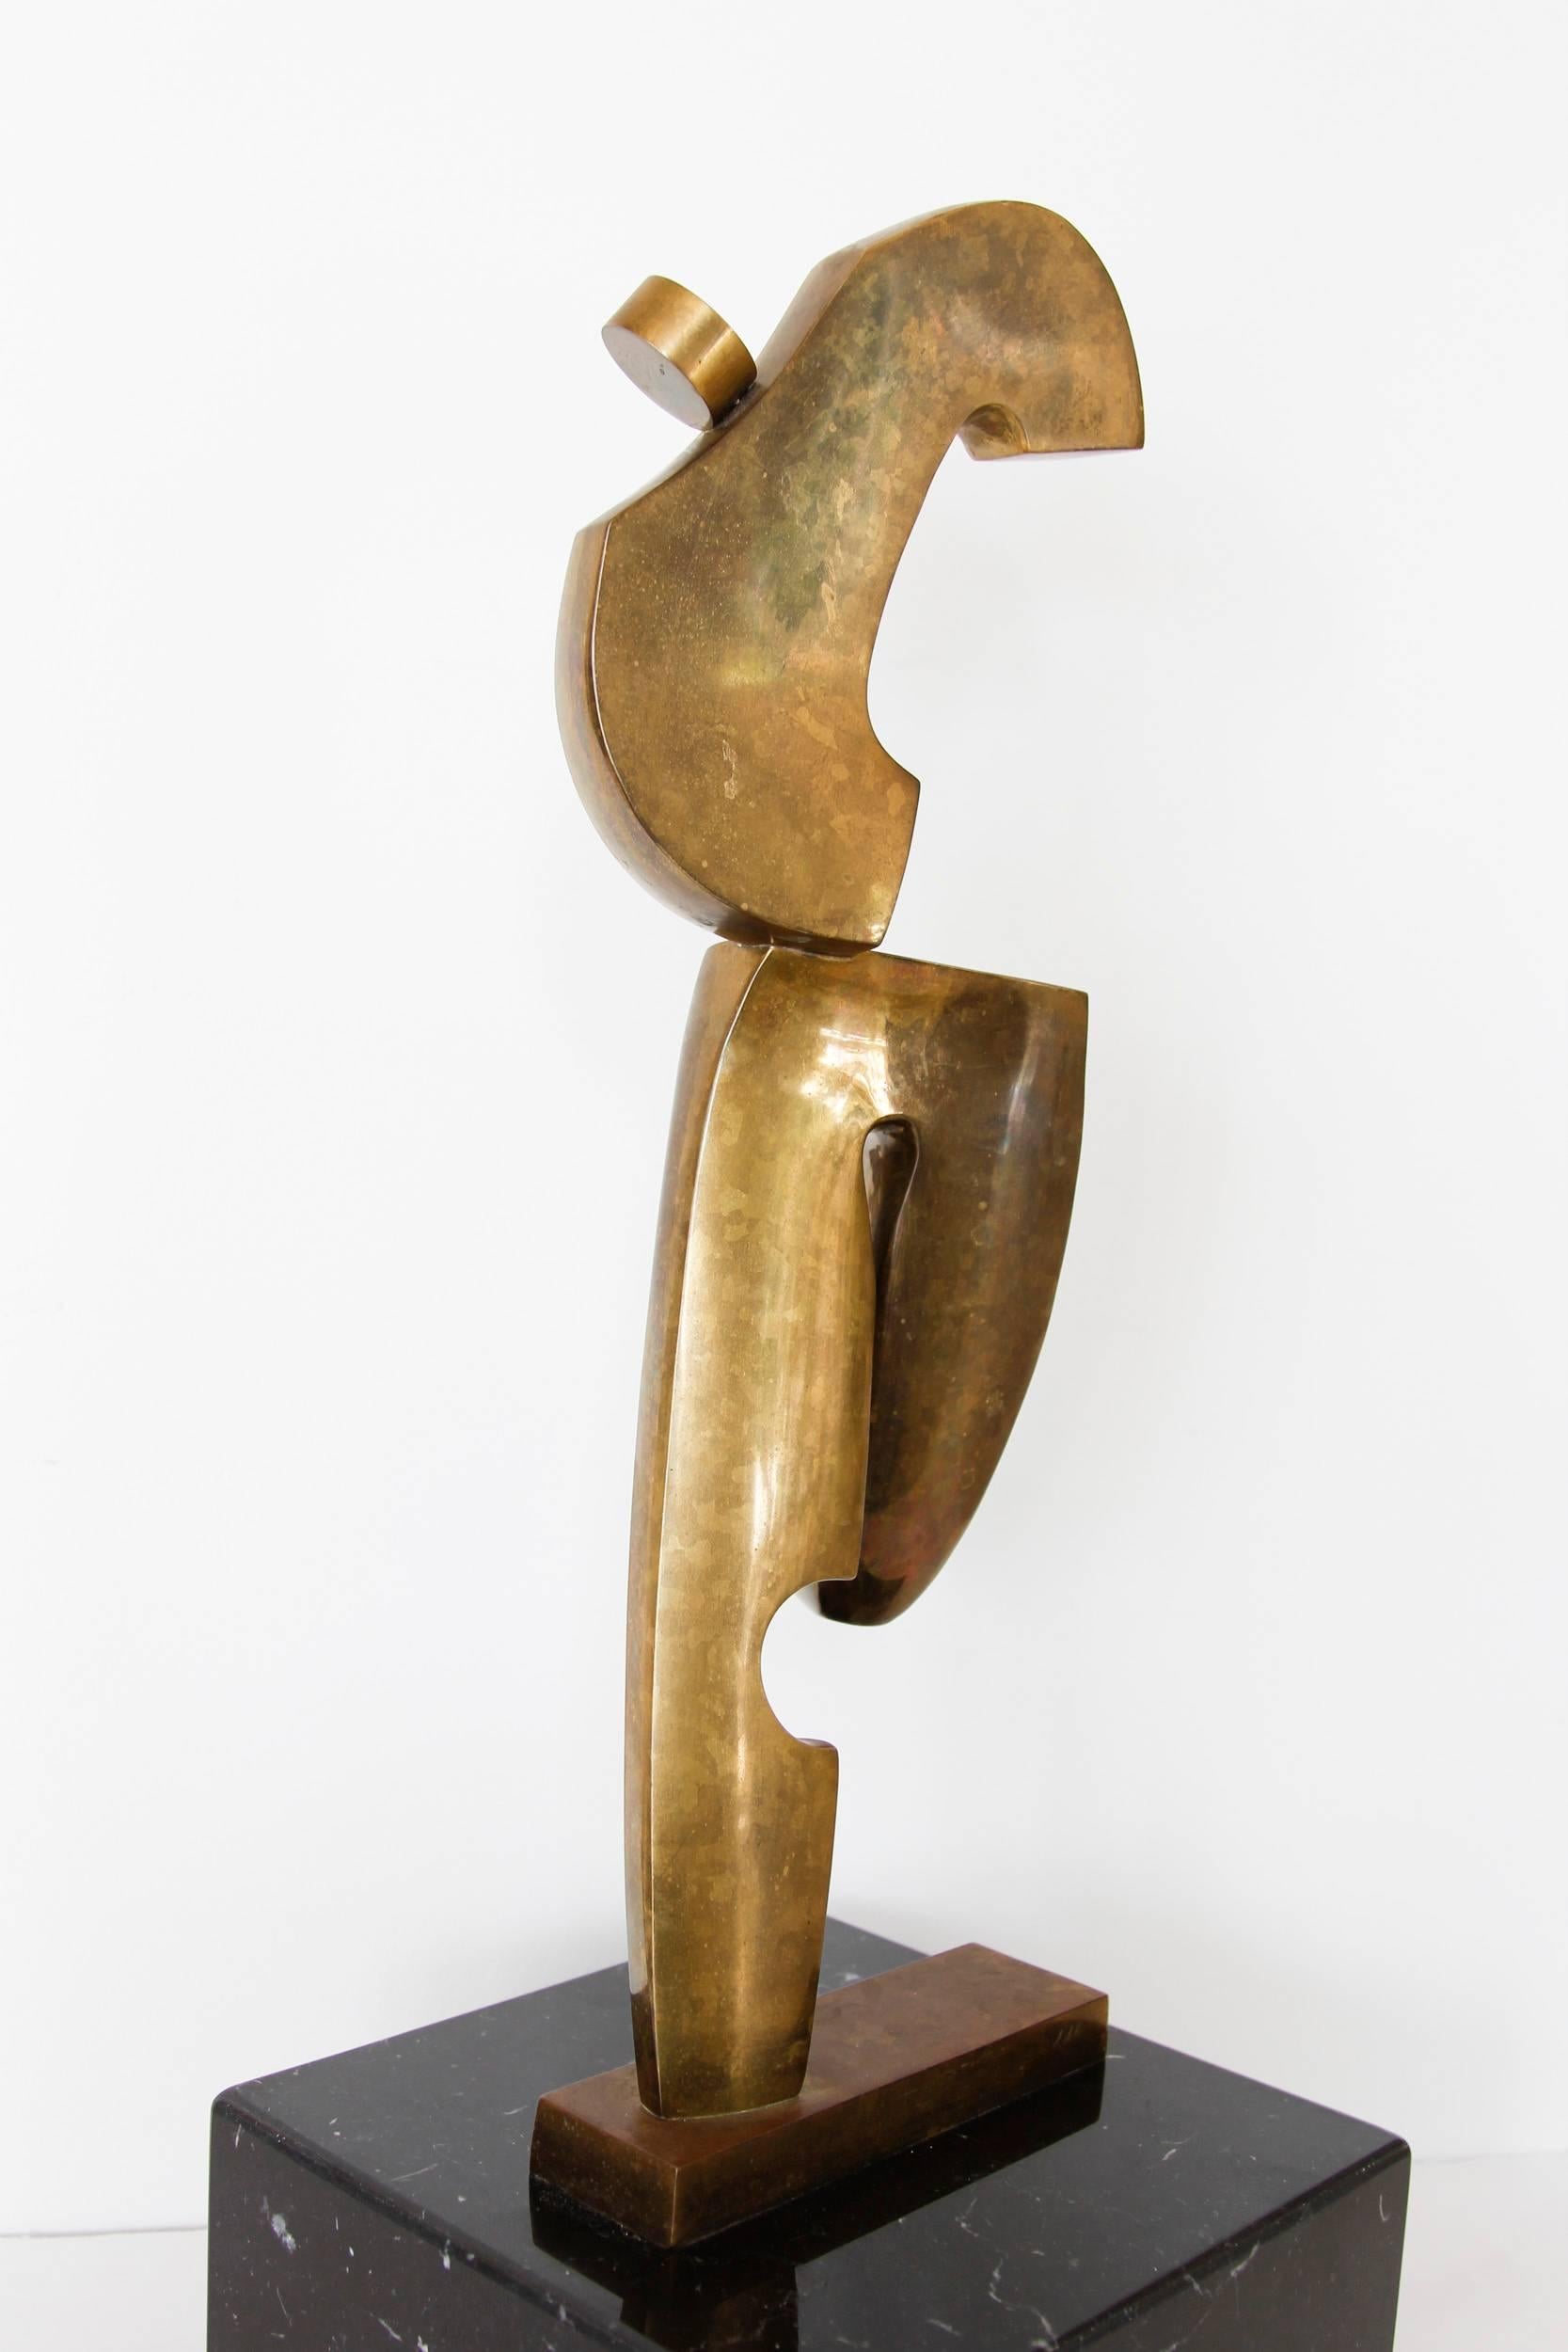 Large bronze modernist figurative sculpture signed by artist Delo.